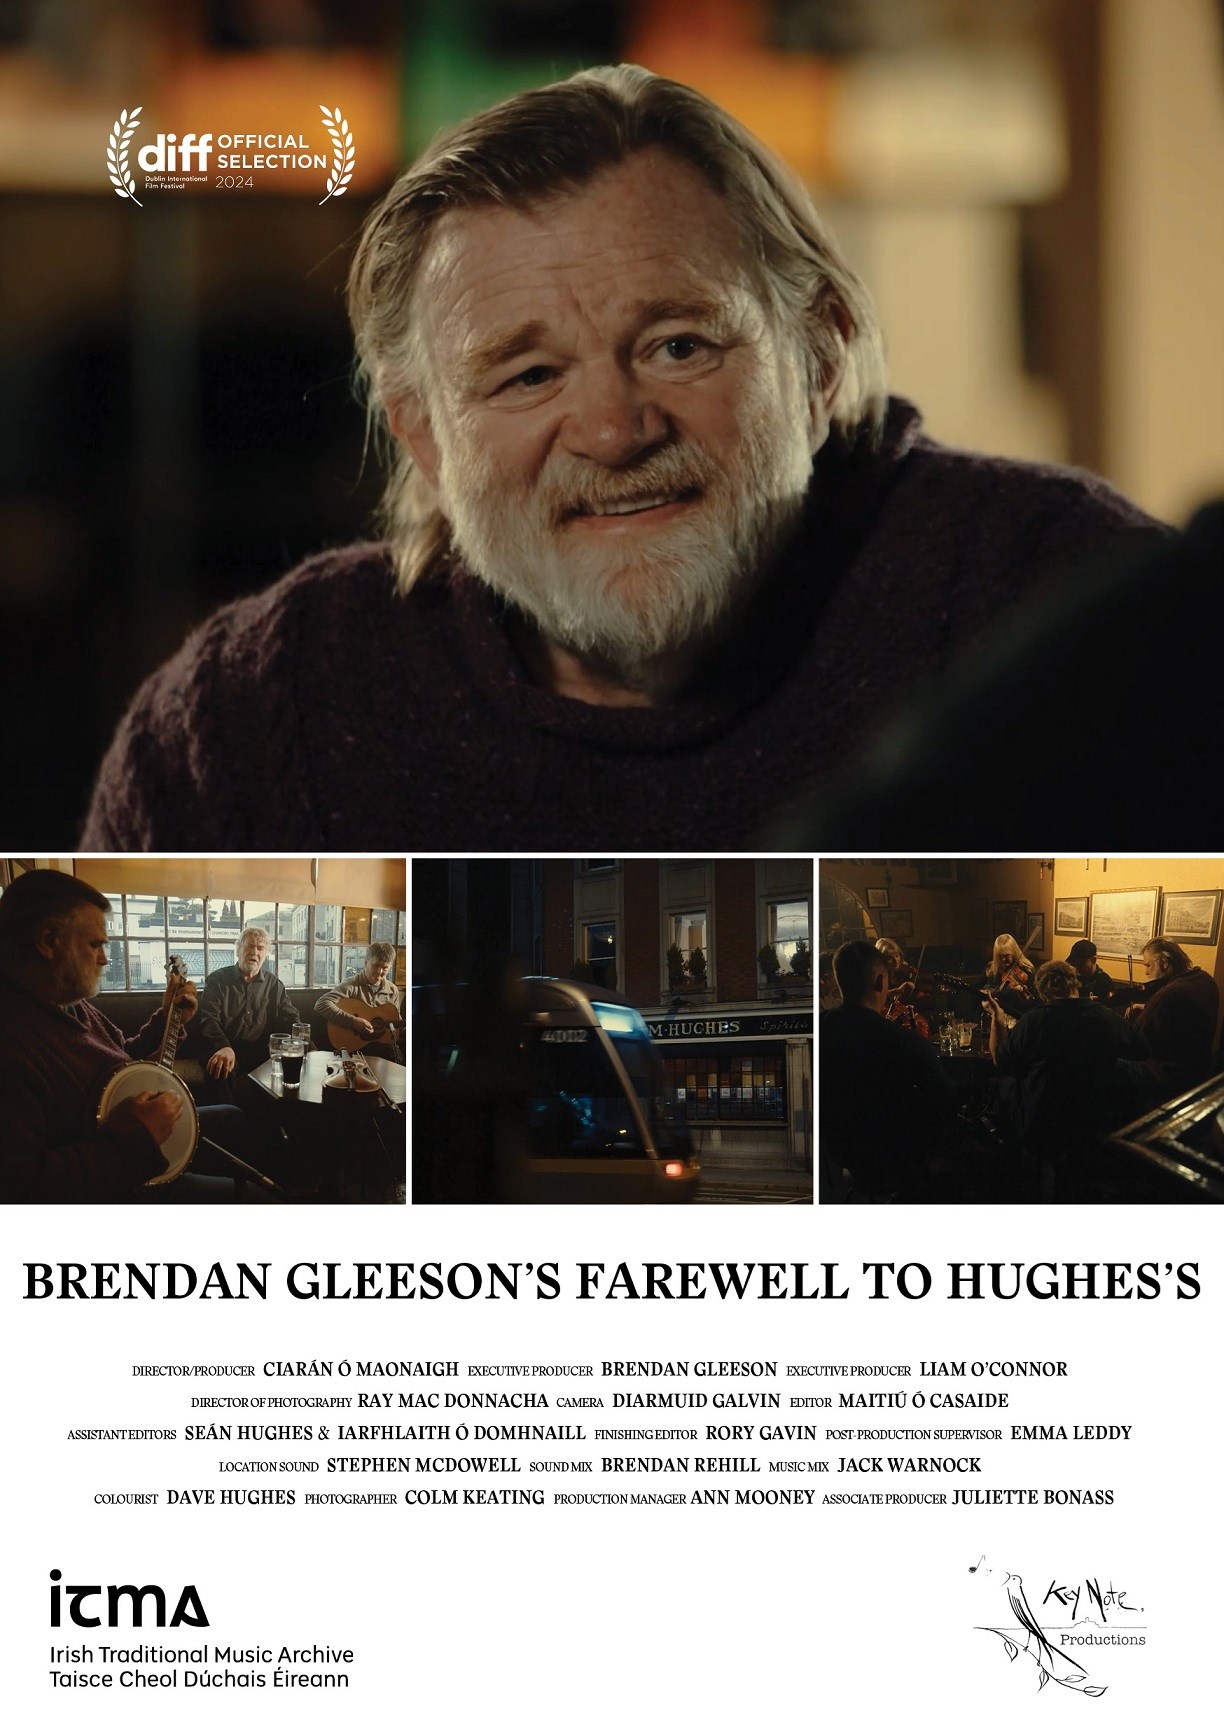 Brendan Gleeson’s Farewell to Hughes + Q&A